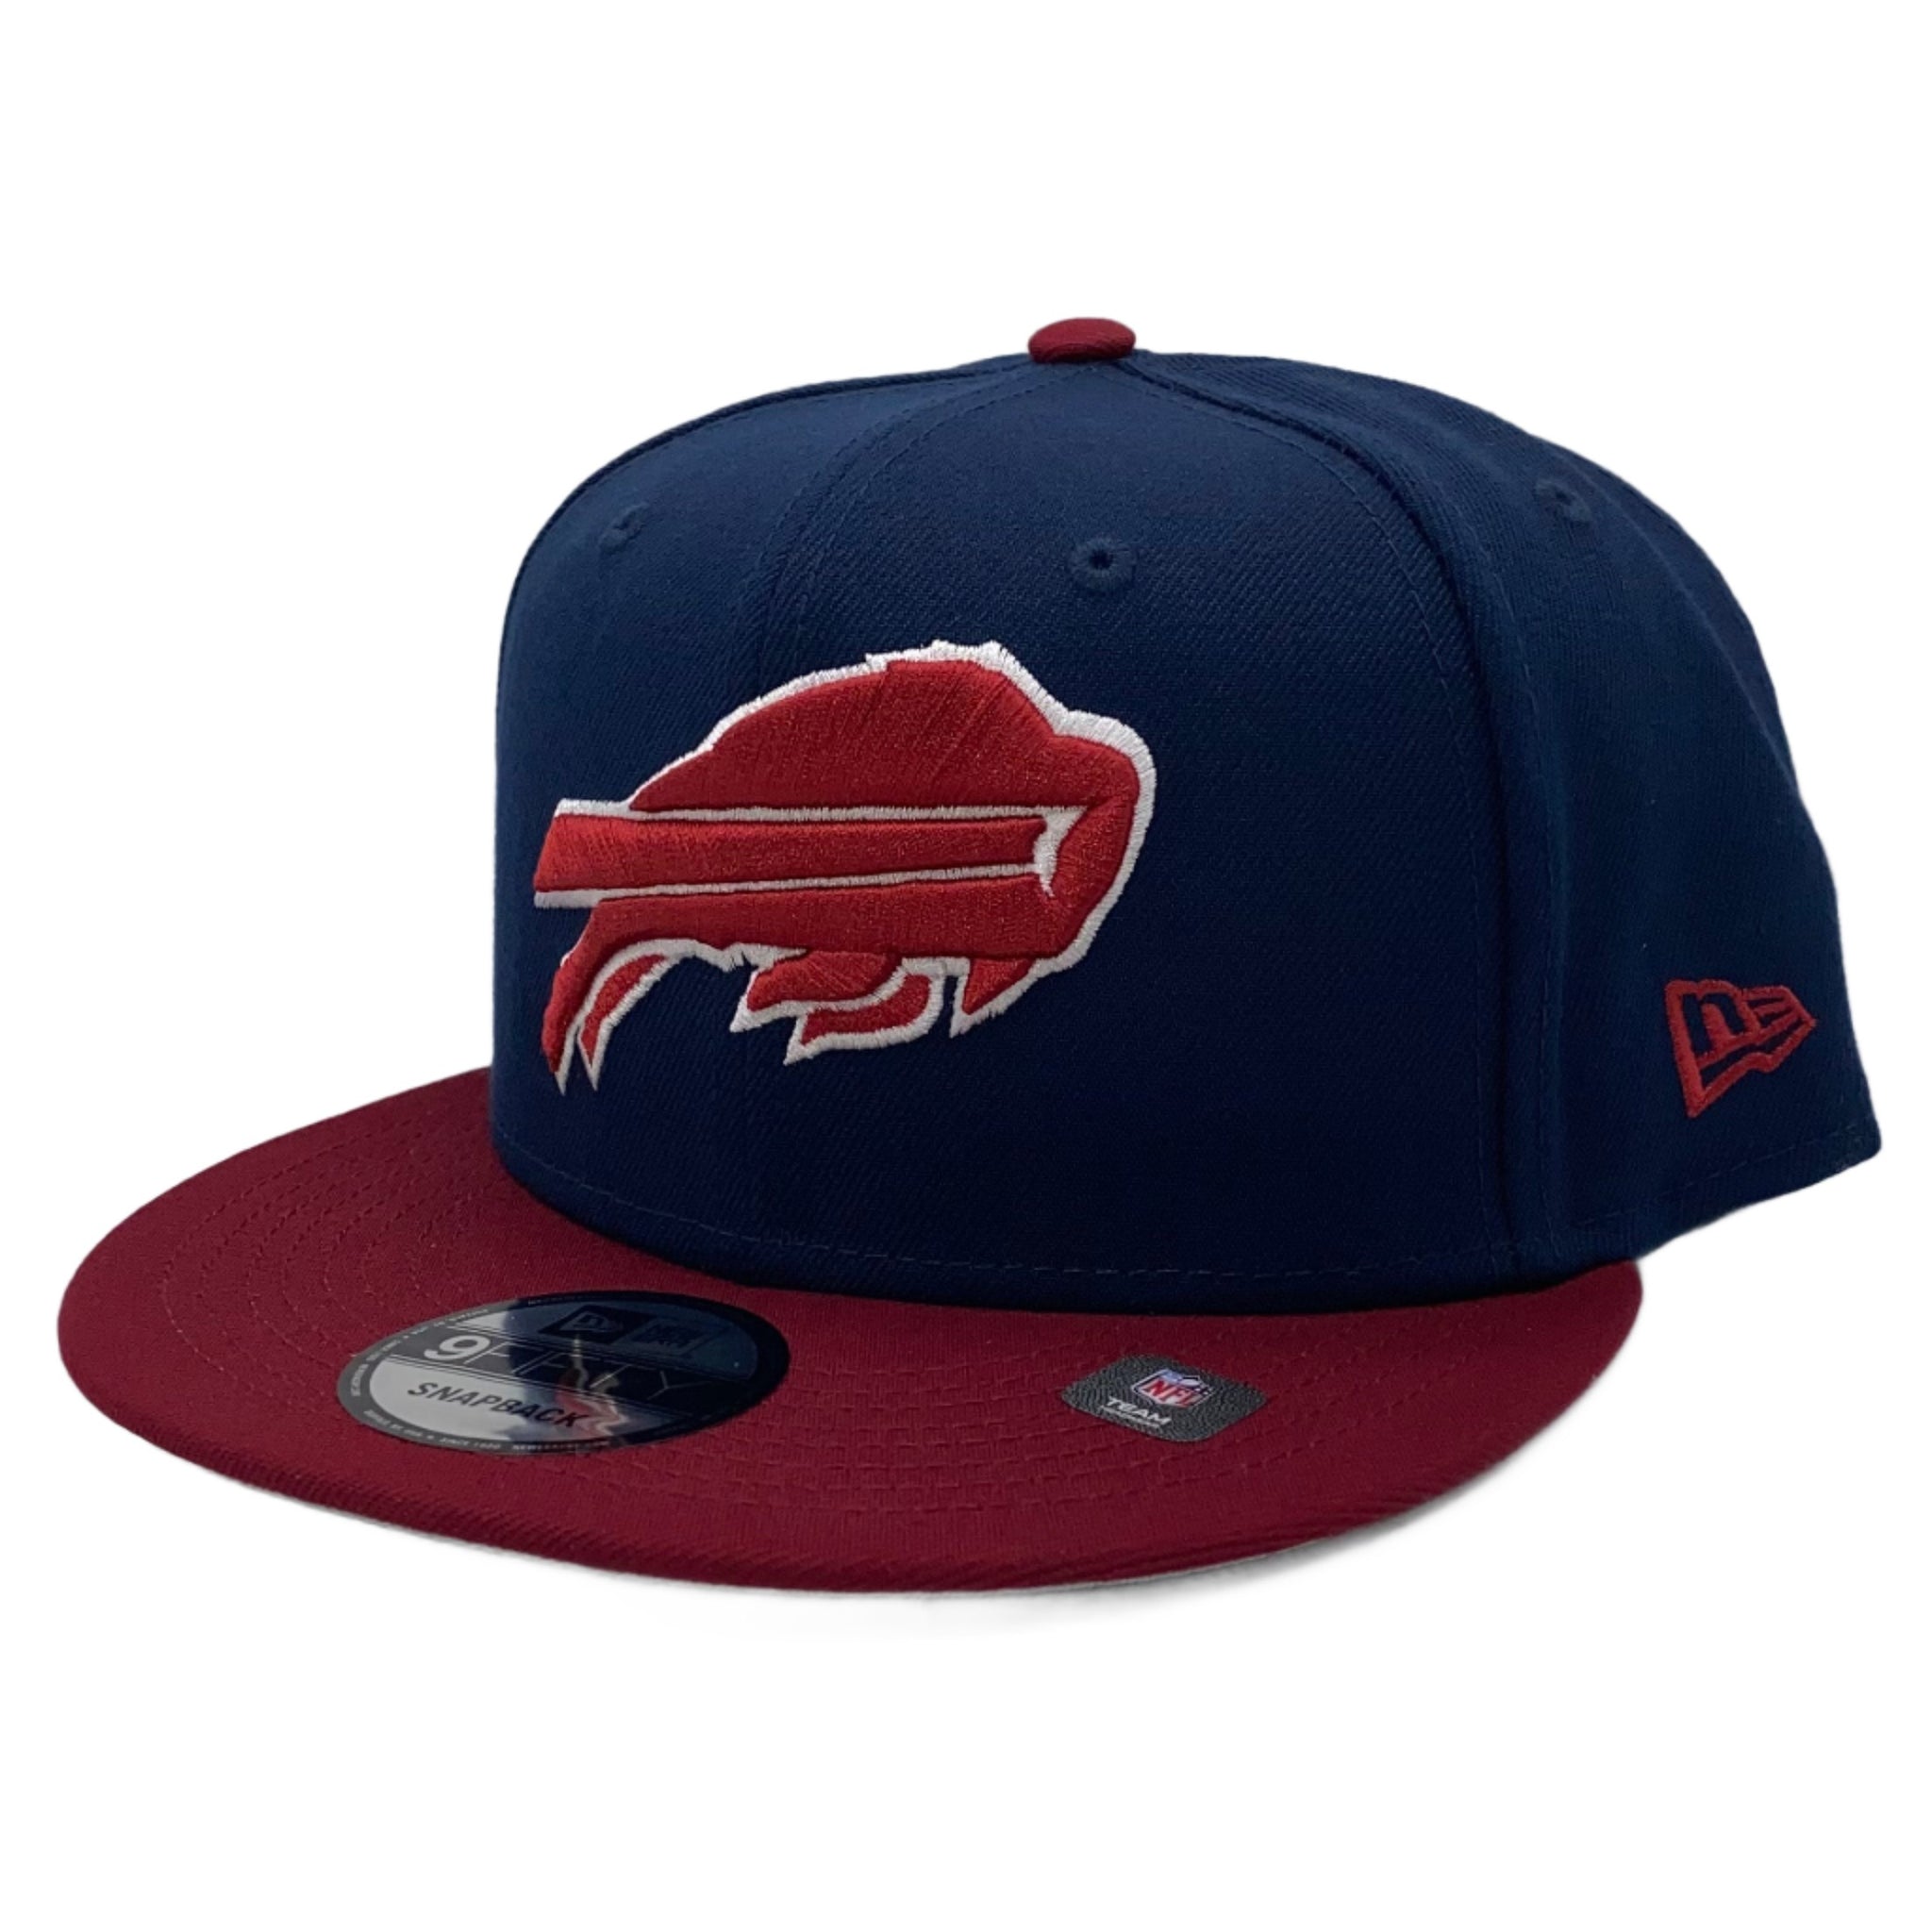 Buffalo Bills New Era 9FIFTY Two Tone Color Pack Navy/Cardinals Snapback Hat